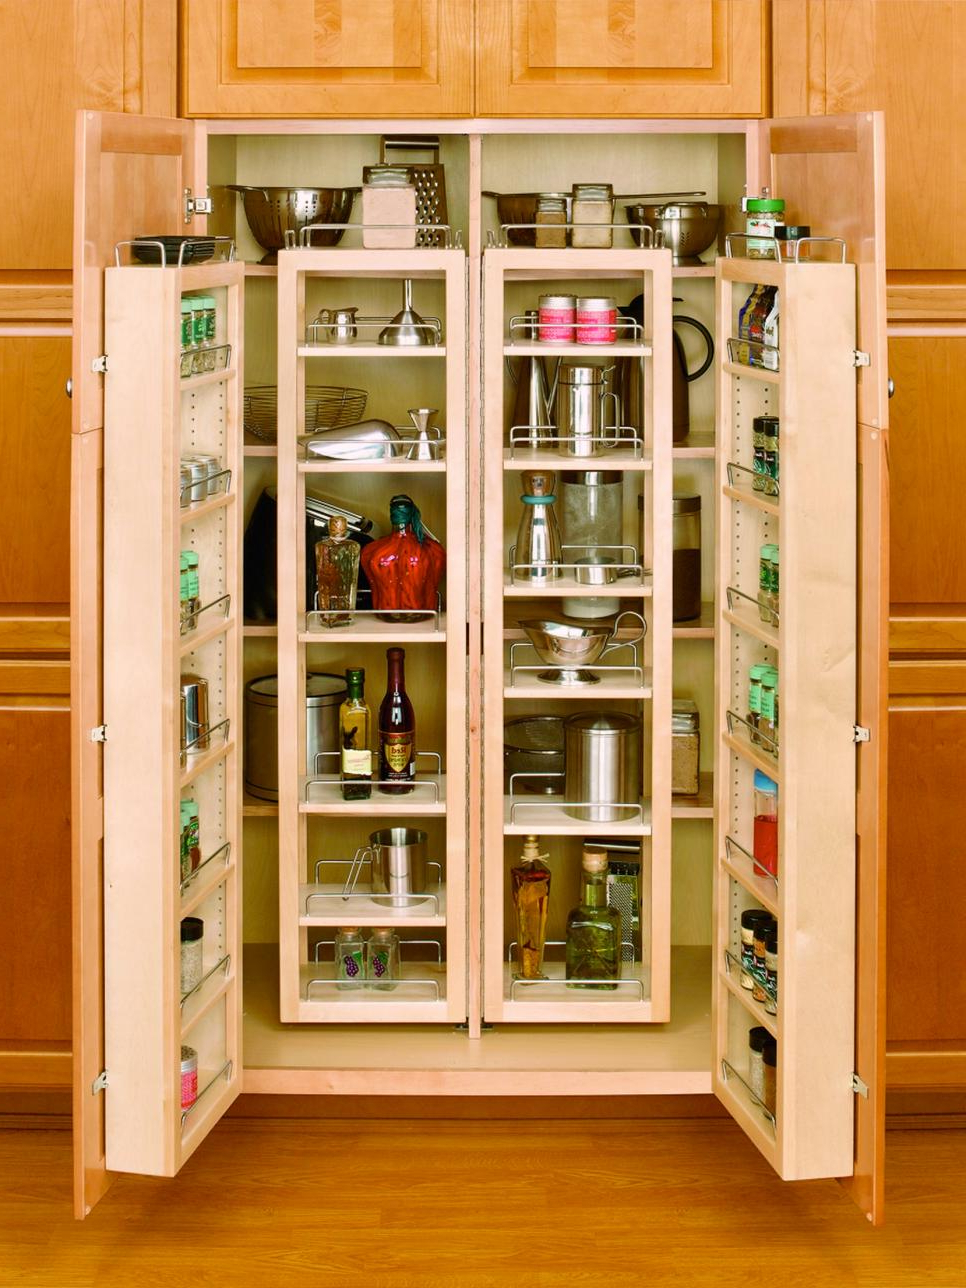 Organization And Design Ideas For Storage In The Kitchen